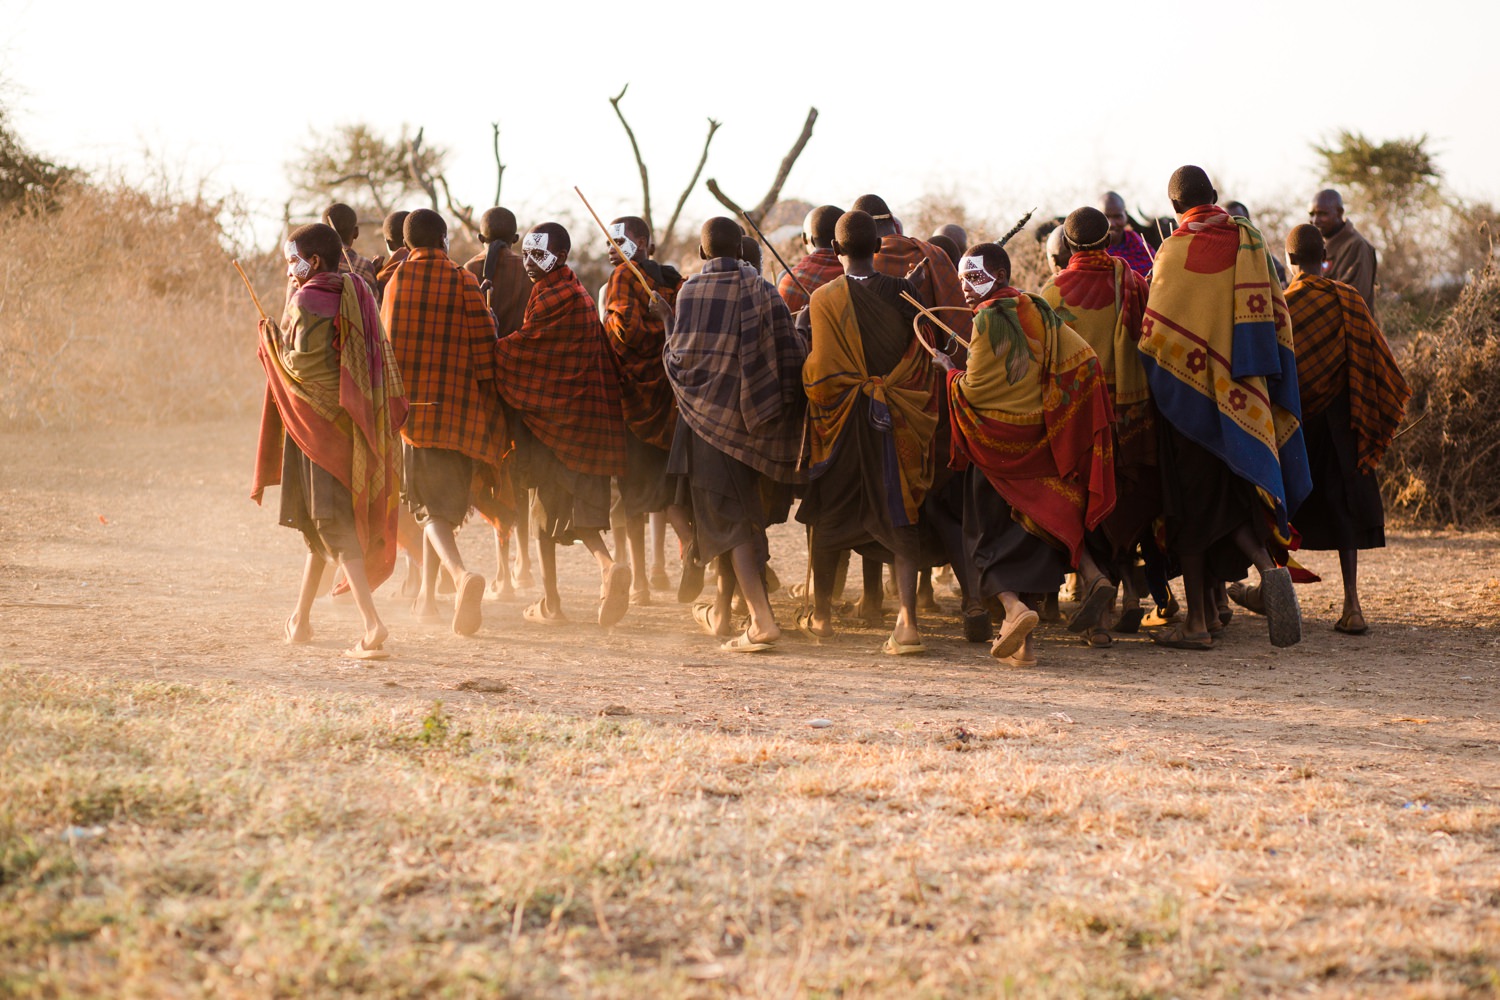 cameron-zegers-travel-photographer-tanzania-ceremony-culture.jpg